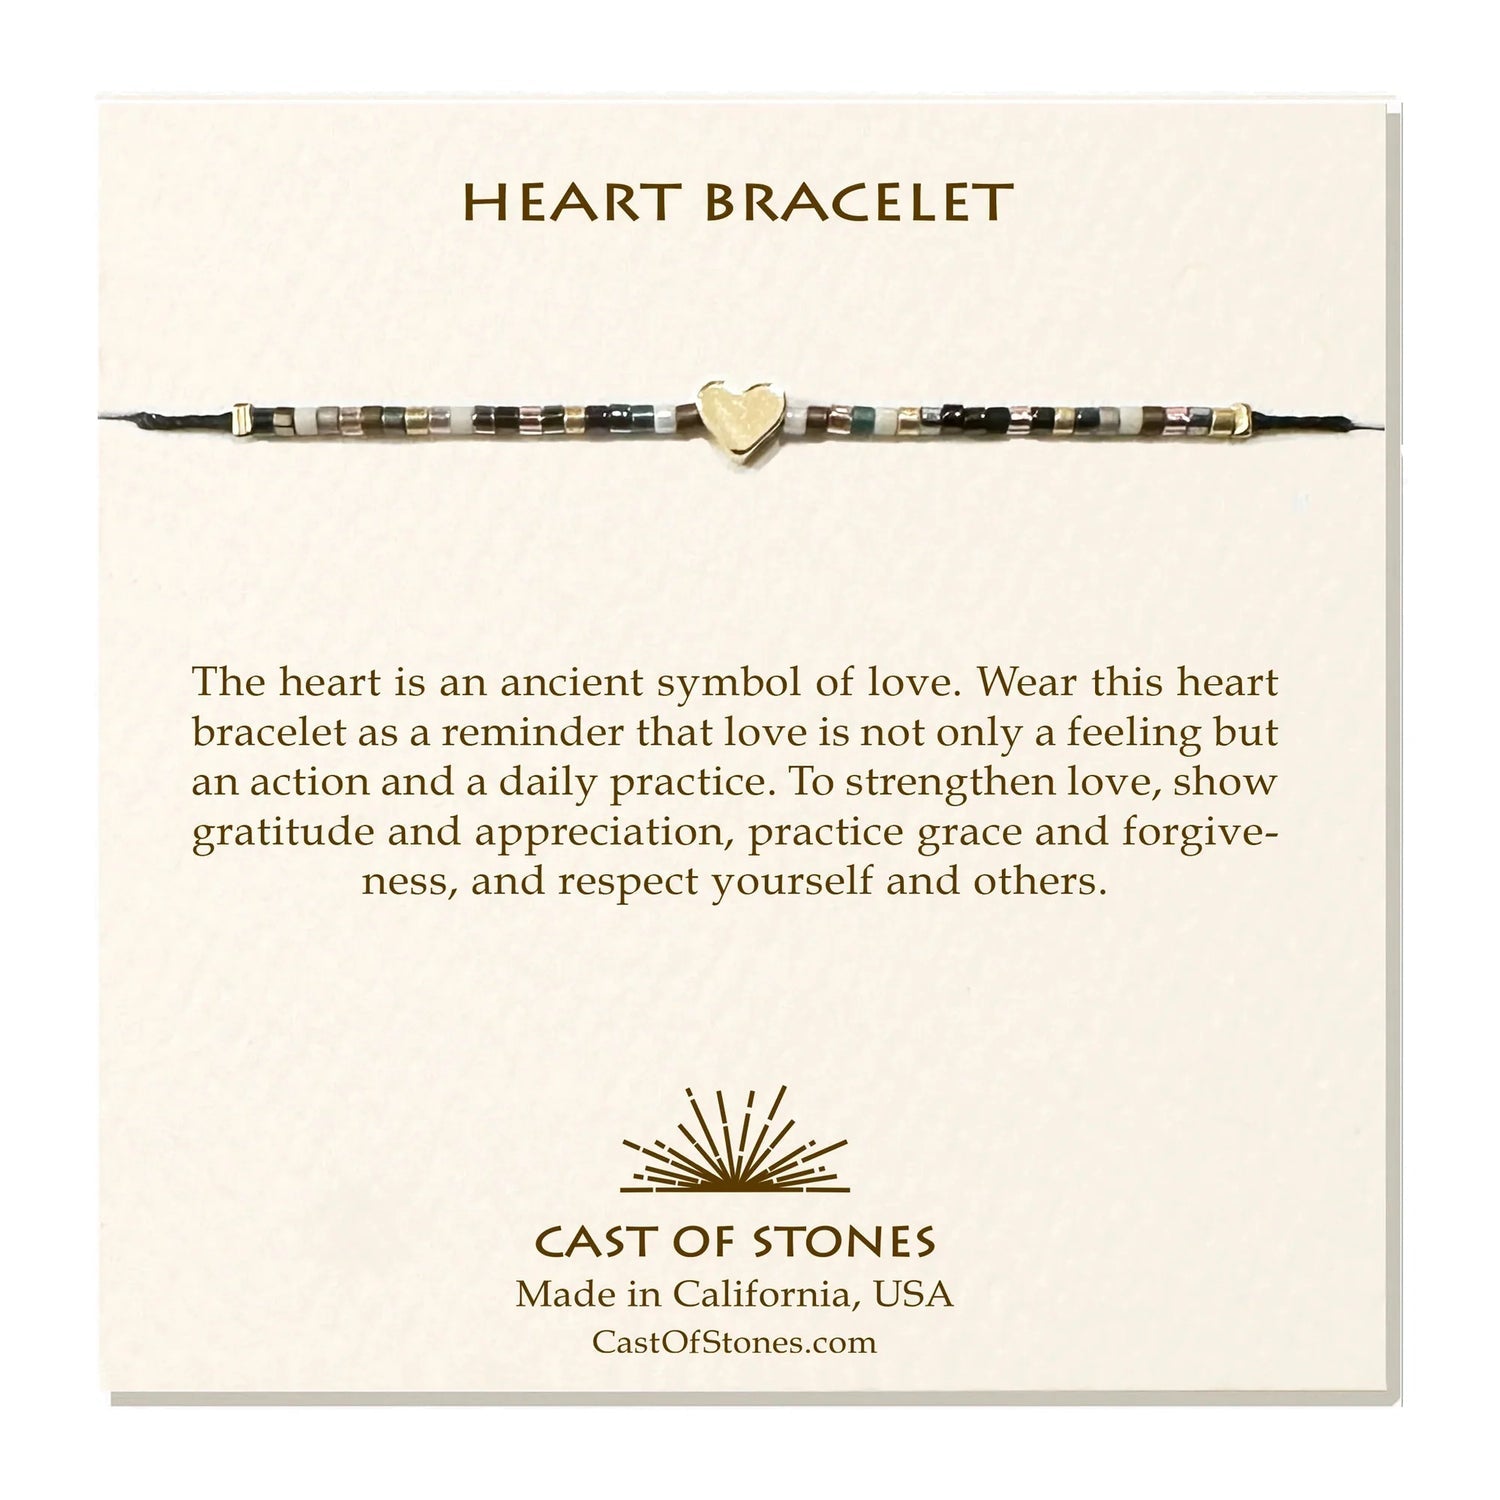 Cast-of-Stones-Heart-Bracelet-Neutral-with-Information-Card.jpg